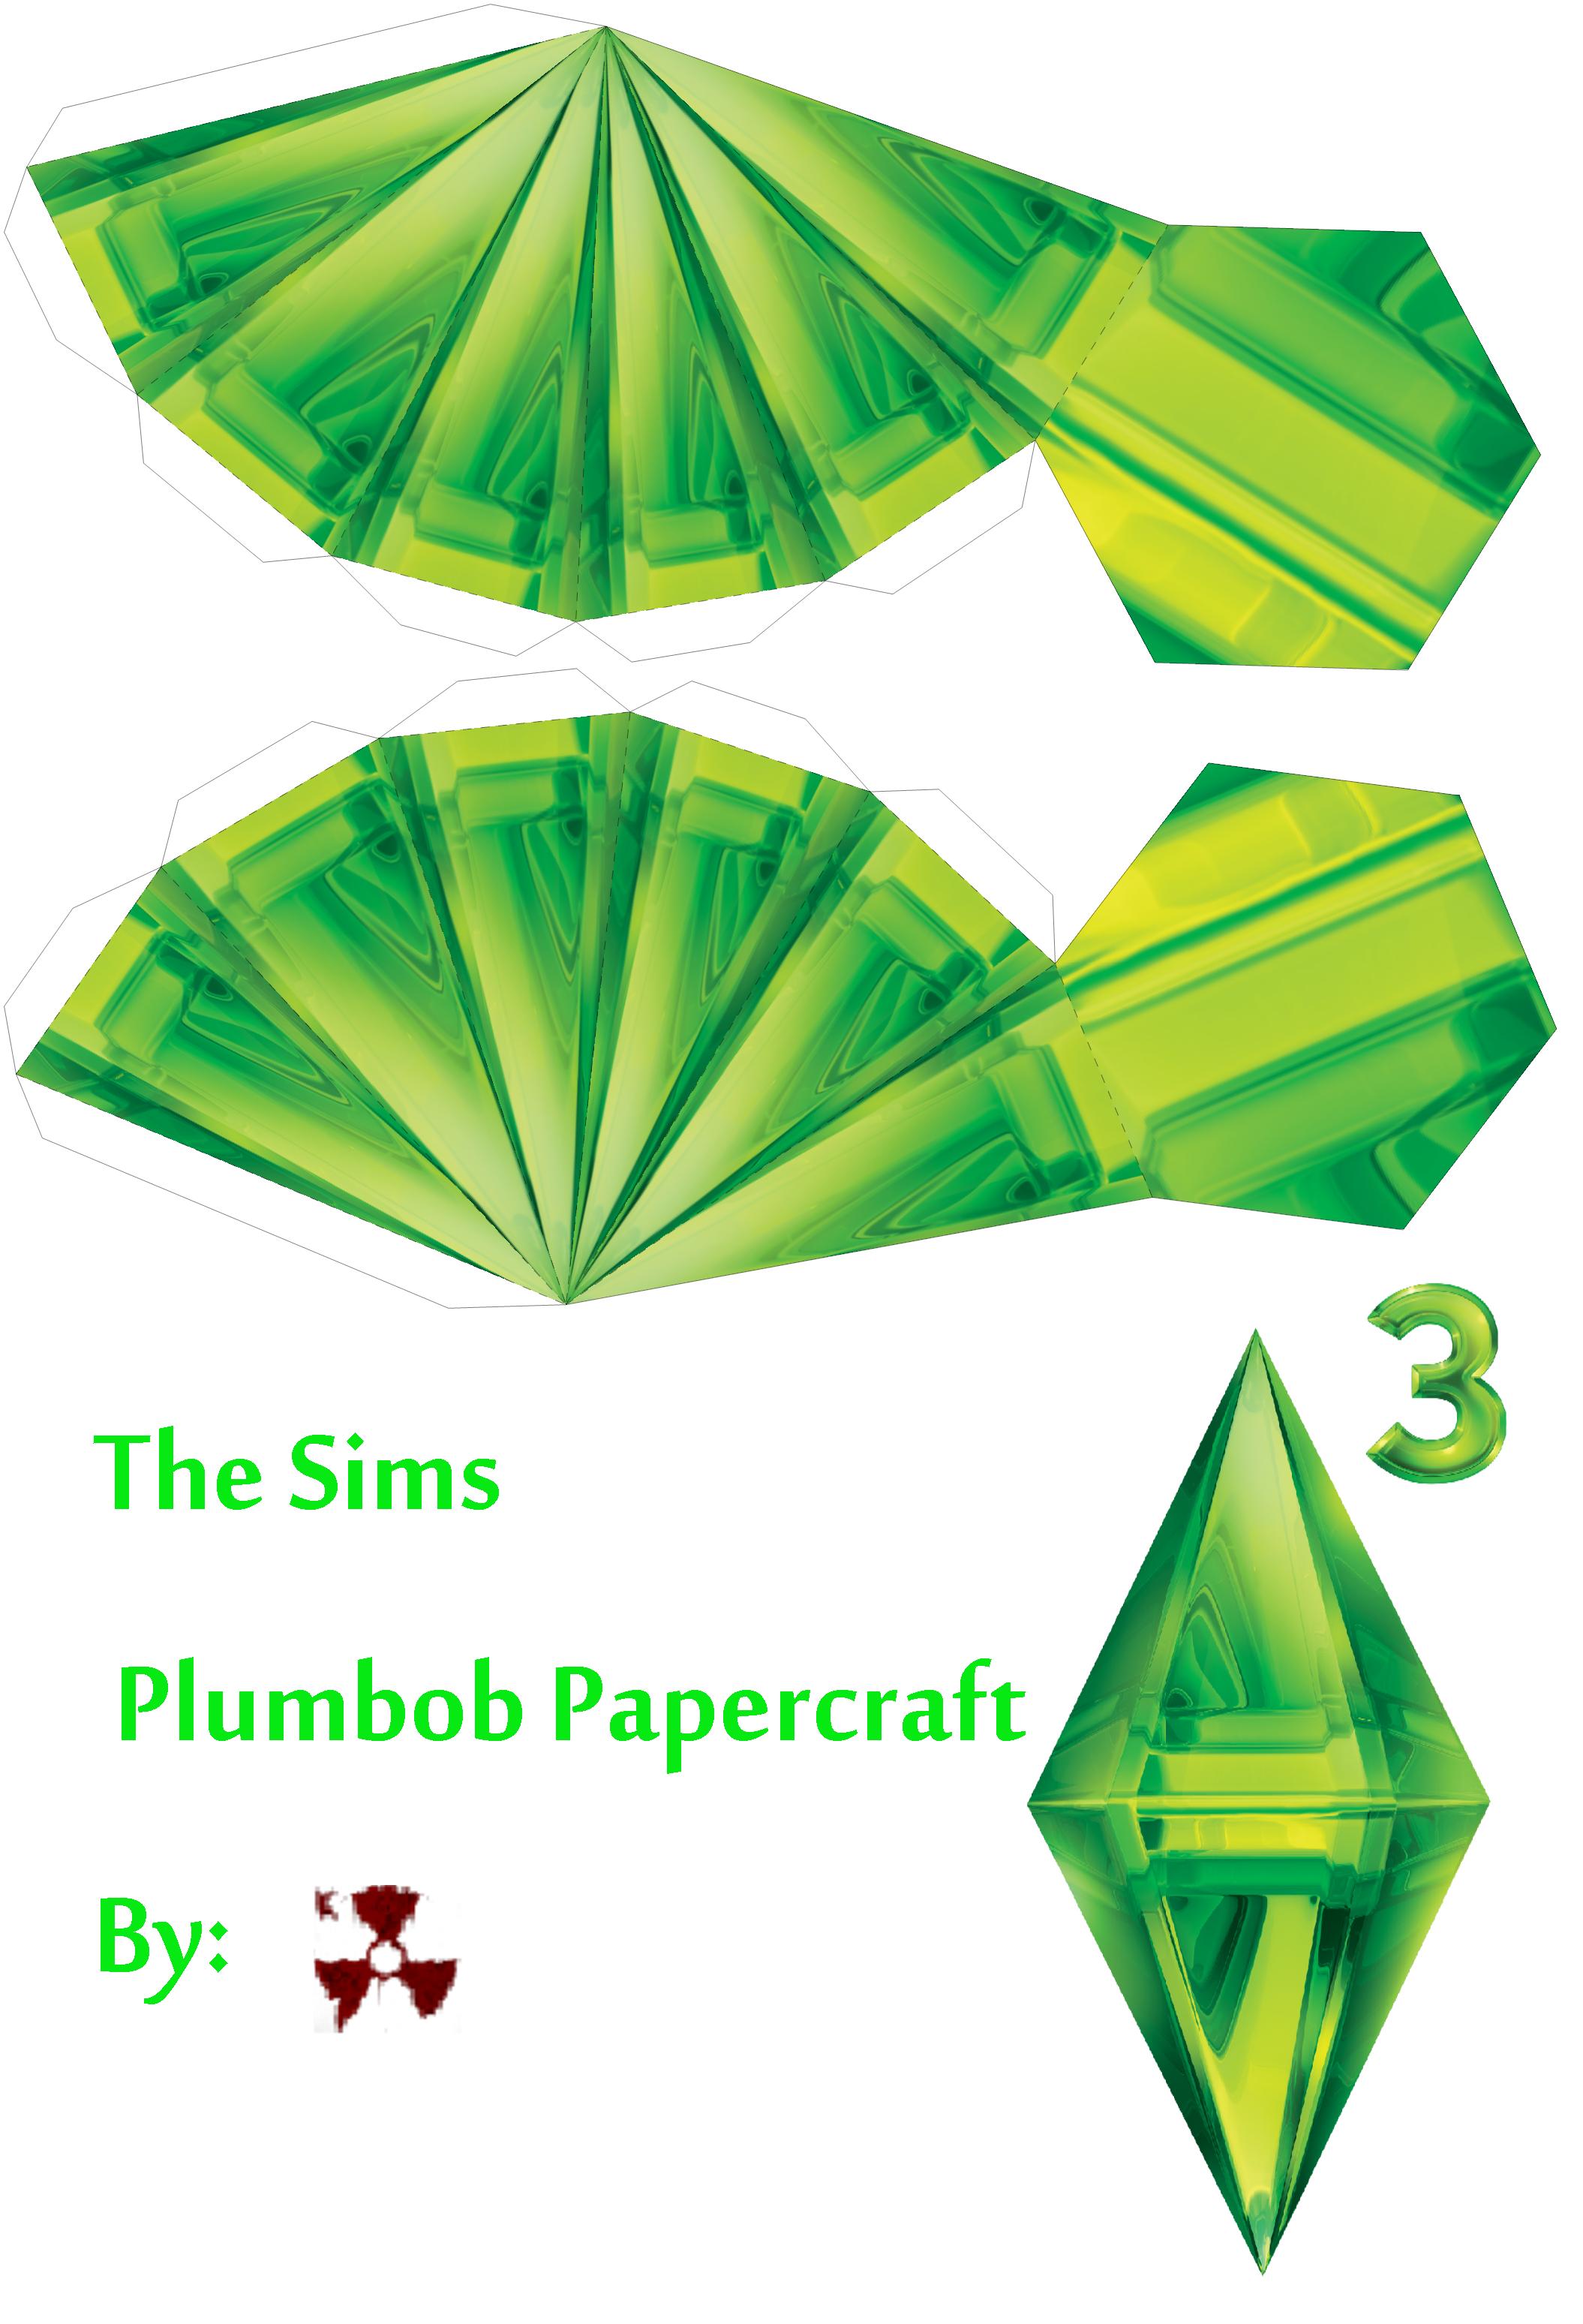 How to Make Sims PaperCraft Plumbbob by TurtleRex on DeviantArt